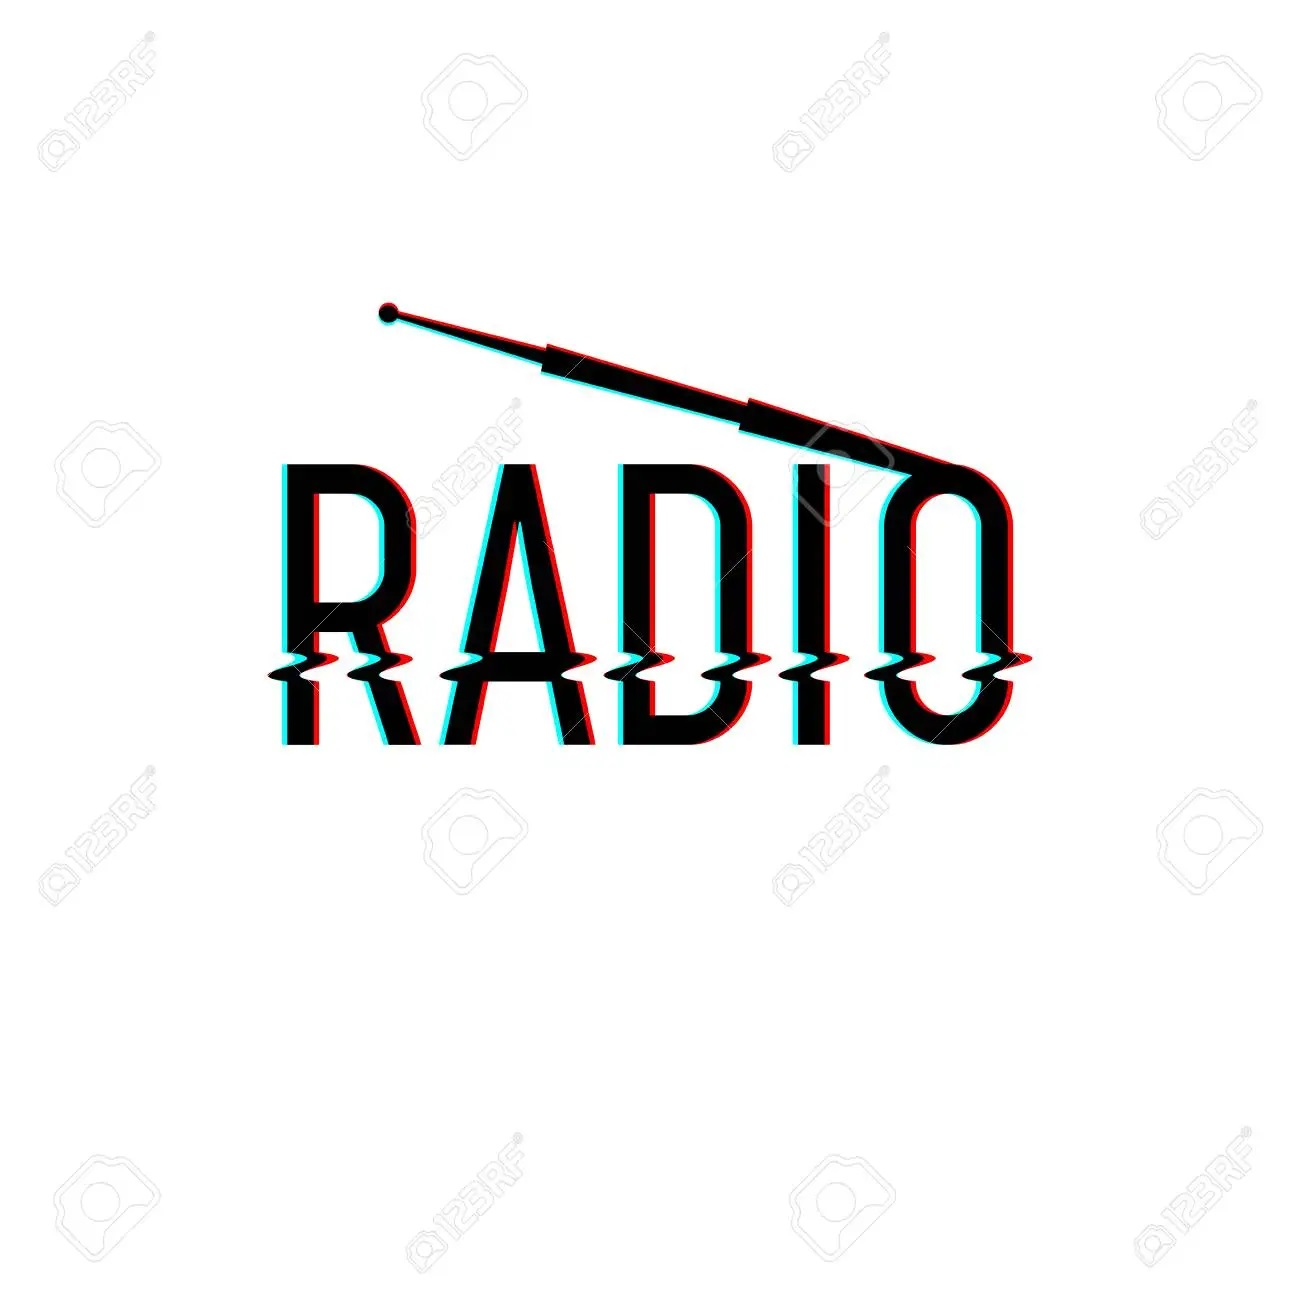 Samuel's Radio